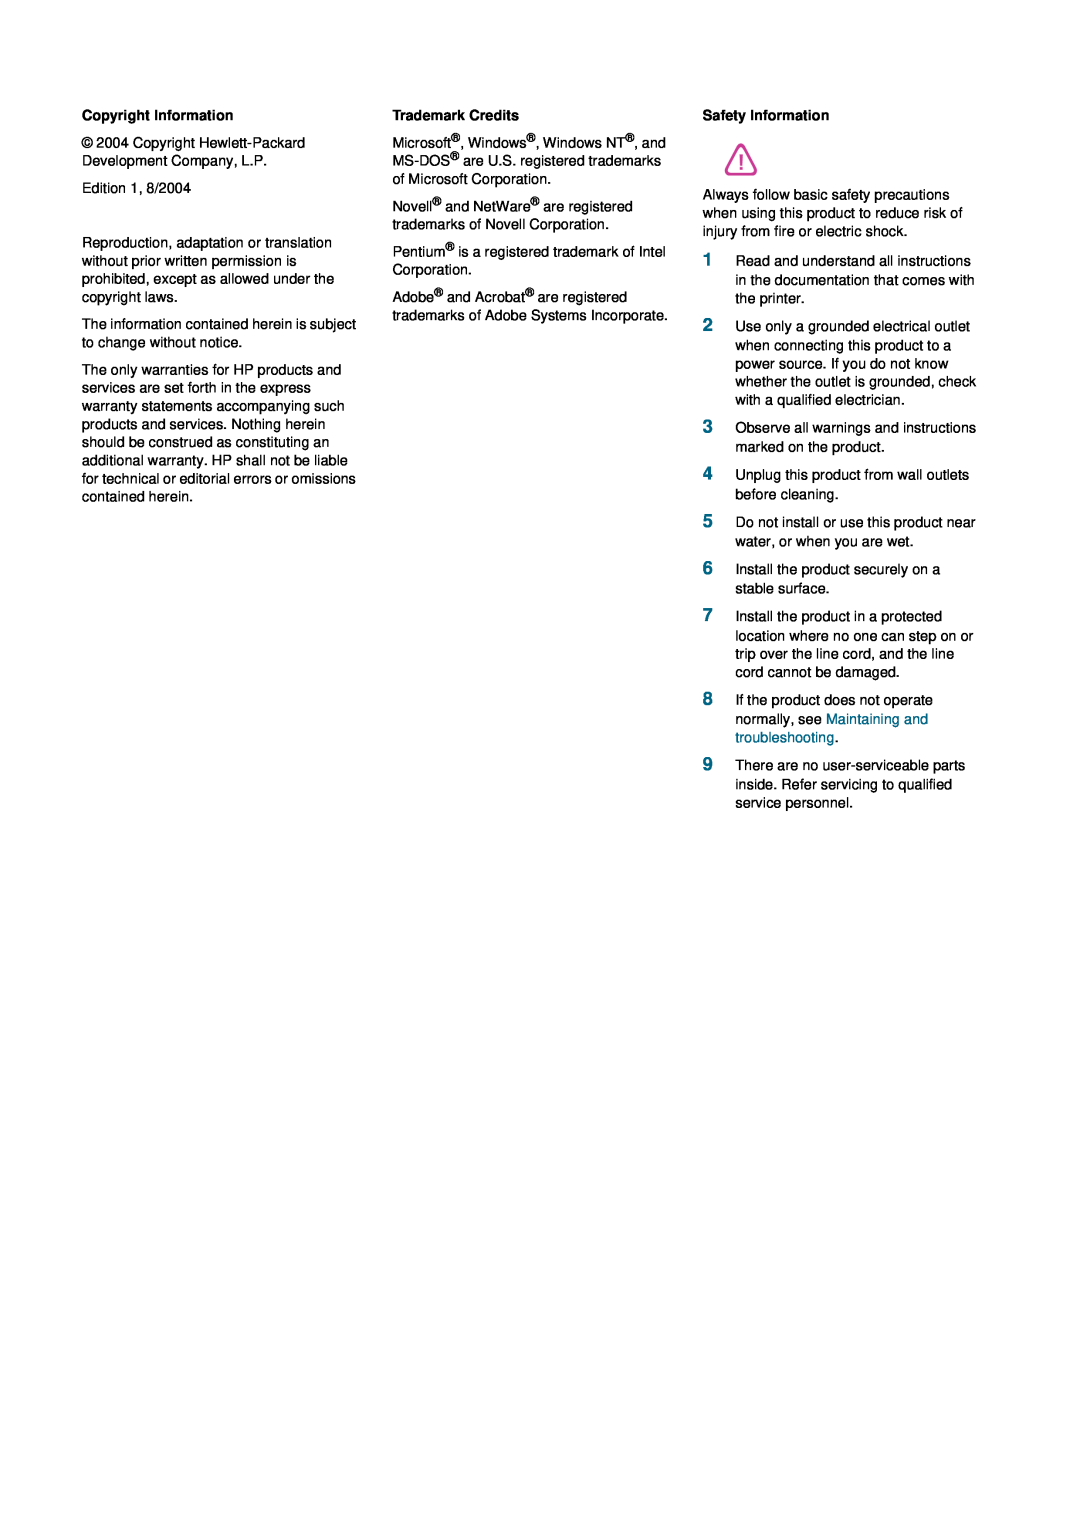 HP 1200 manual Copyright Information, Trademark Credits, Safety Information 